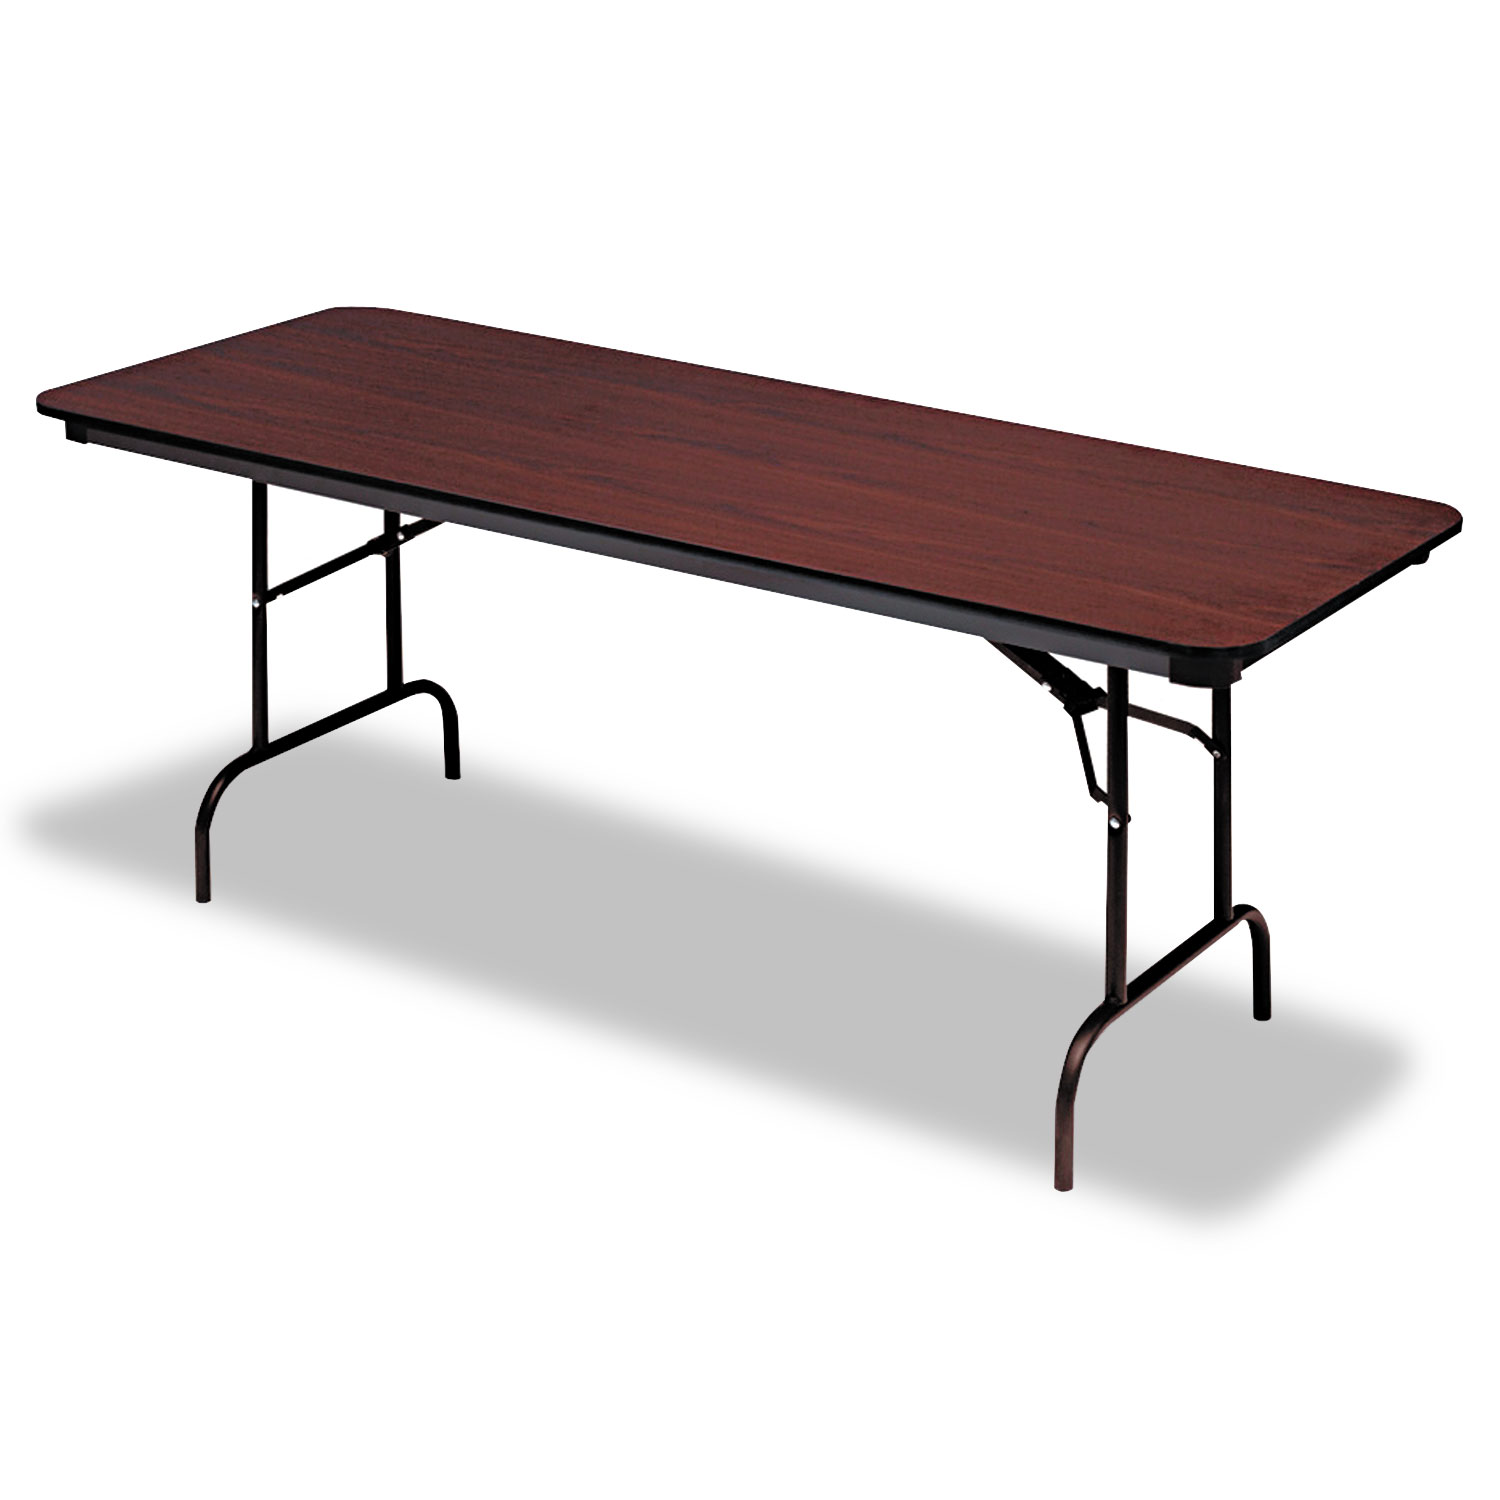  Iceberg 55224 Premium Wood Laminate Folding Table, Rectangular, 72w x 30d x 29h, Mahogany (ICE55224) 